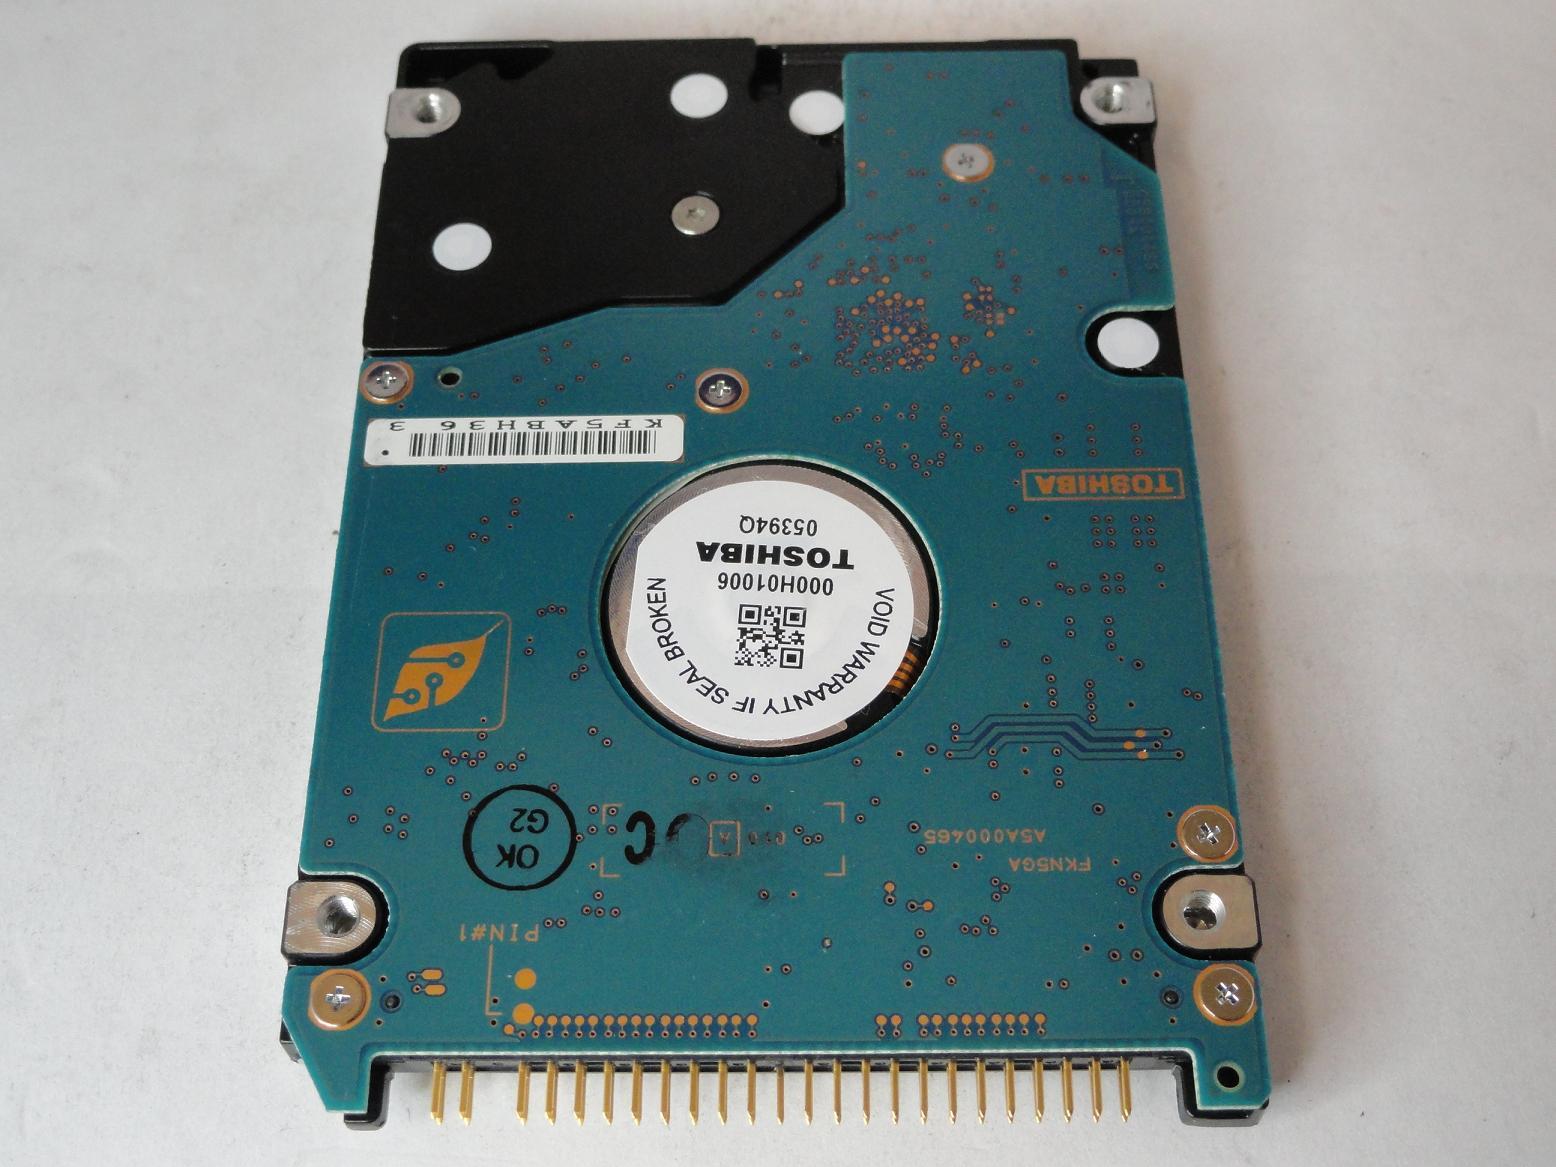 MC6406_HDD2194_Toshiba Dell 60GB IDE 5400rpm 2.5in HDD - Image2